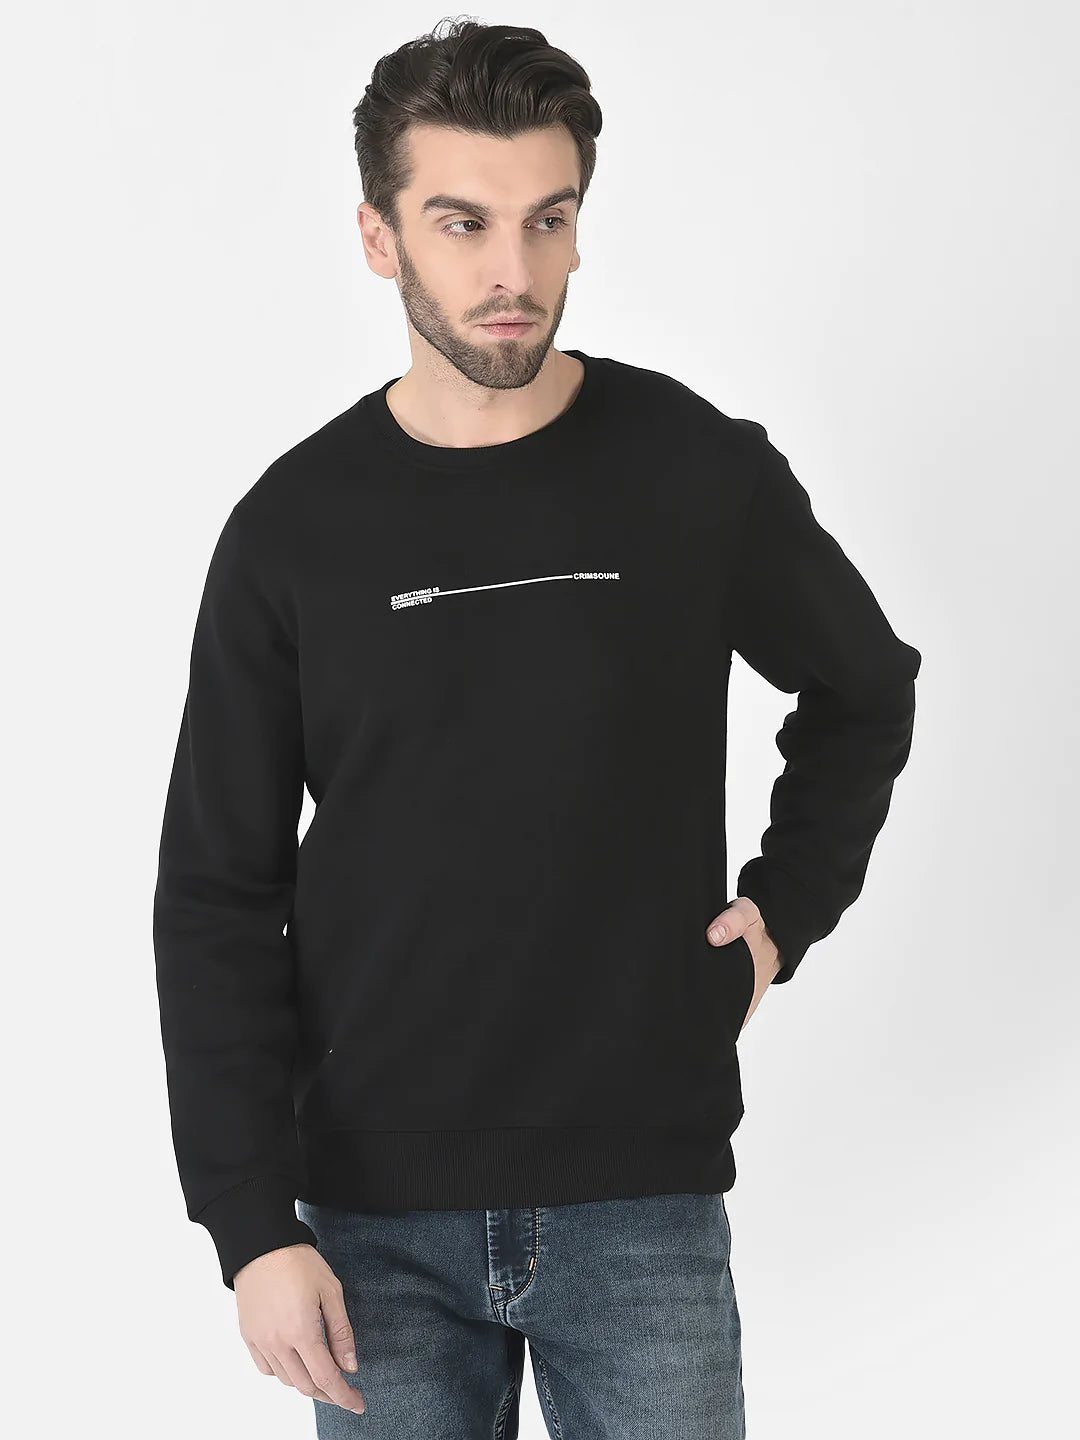  Black Connection Sweatshirt